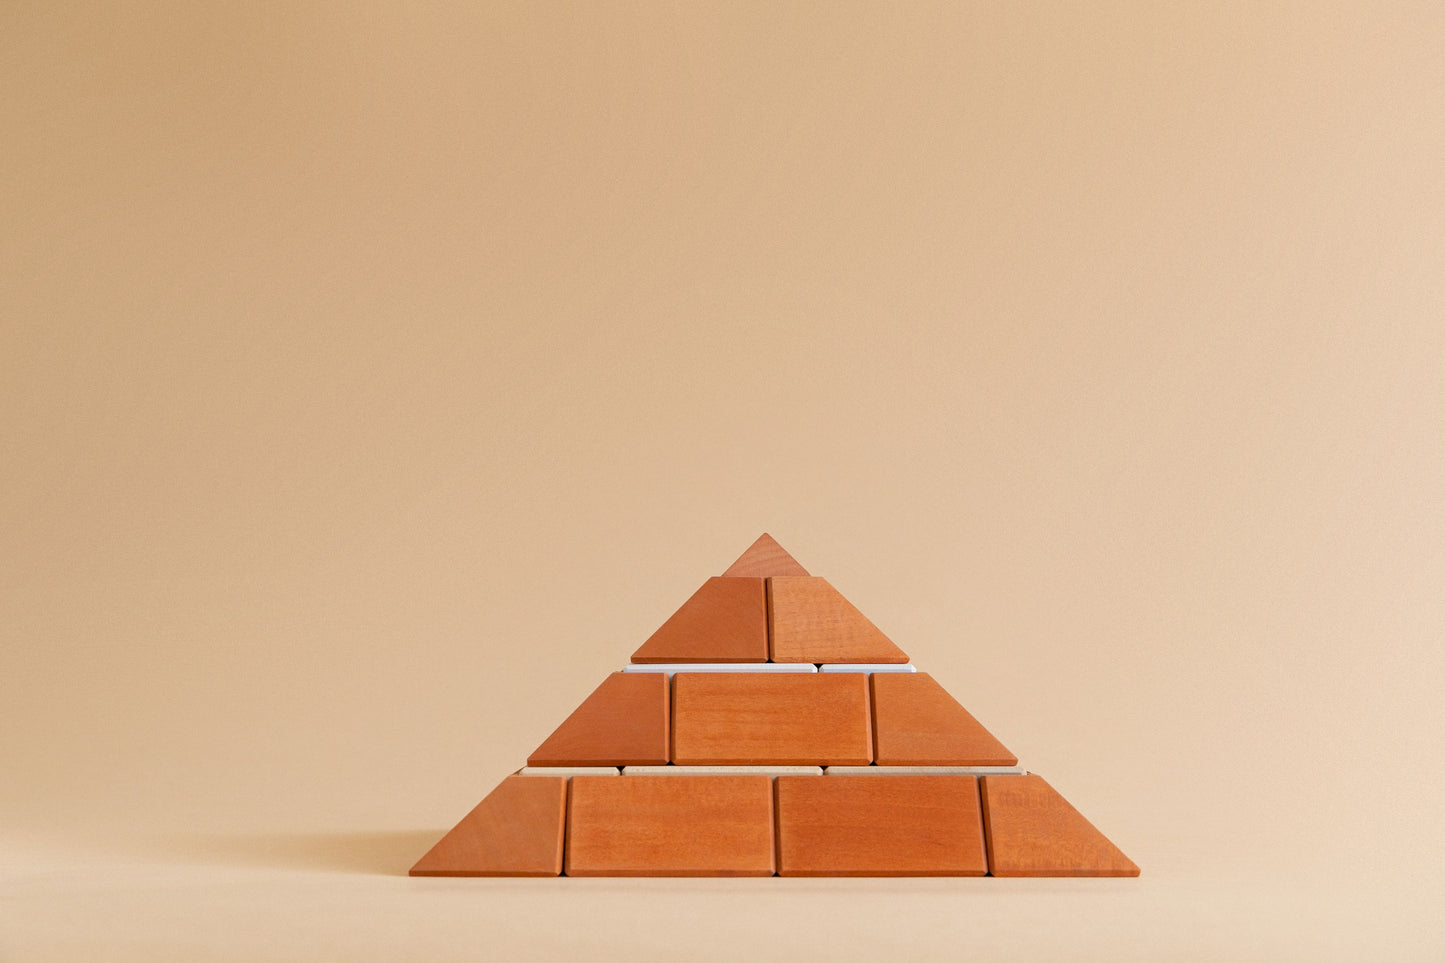 Ensemble de blocs pyramidaux par Avdar